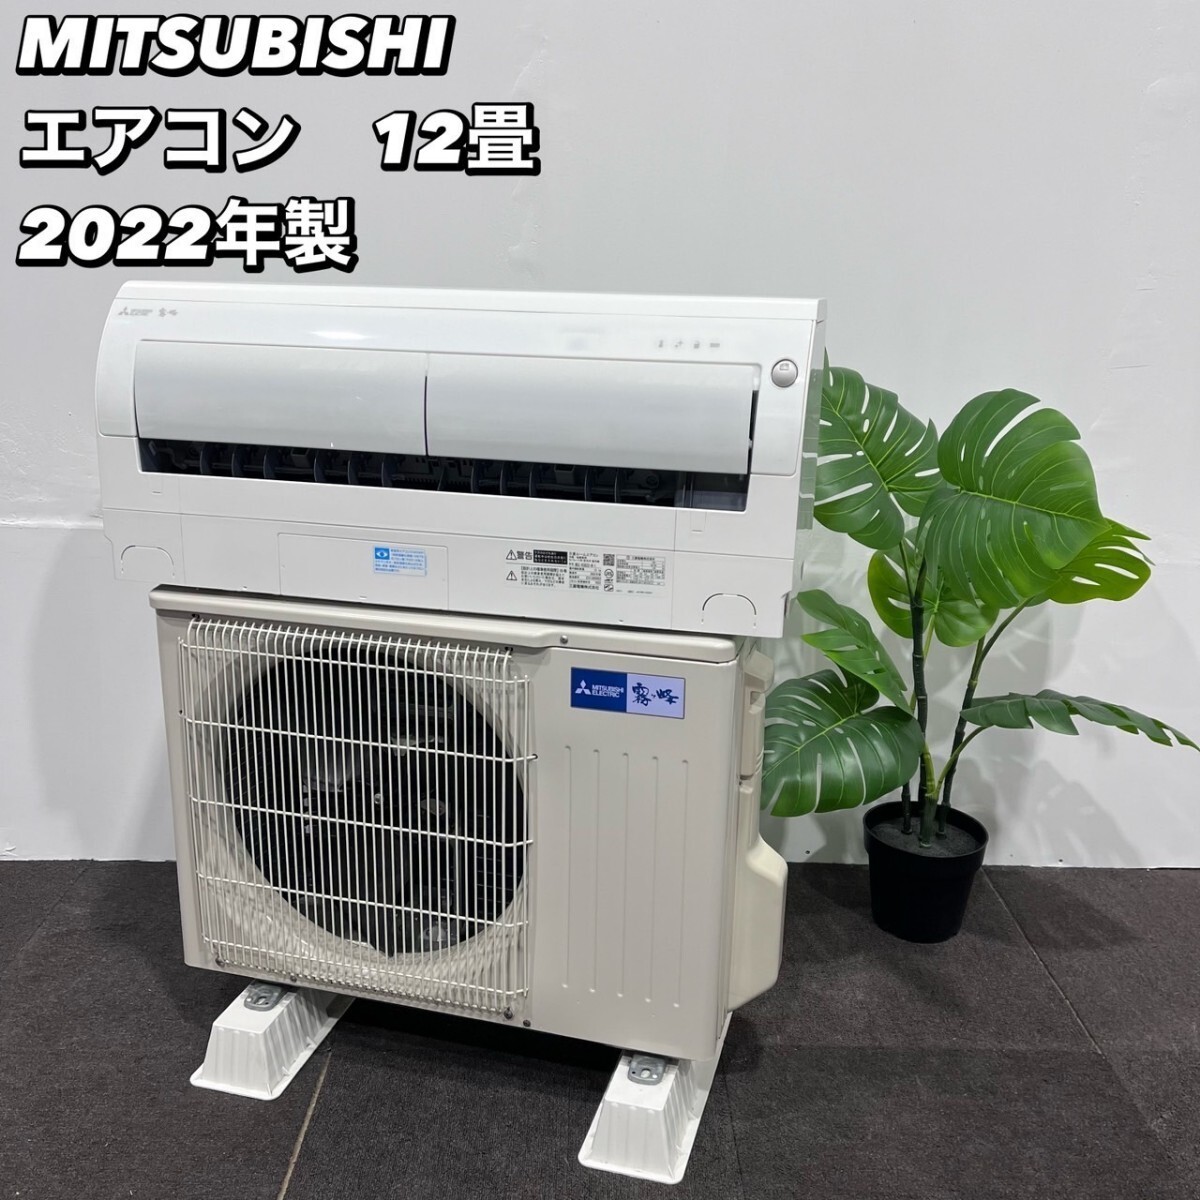 MITSUBISHI エアコン MSZ-R3622-W-1 12畳用 2022年製 Ma042